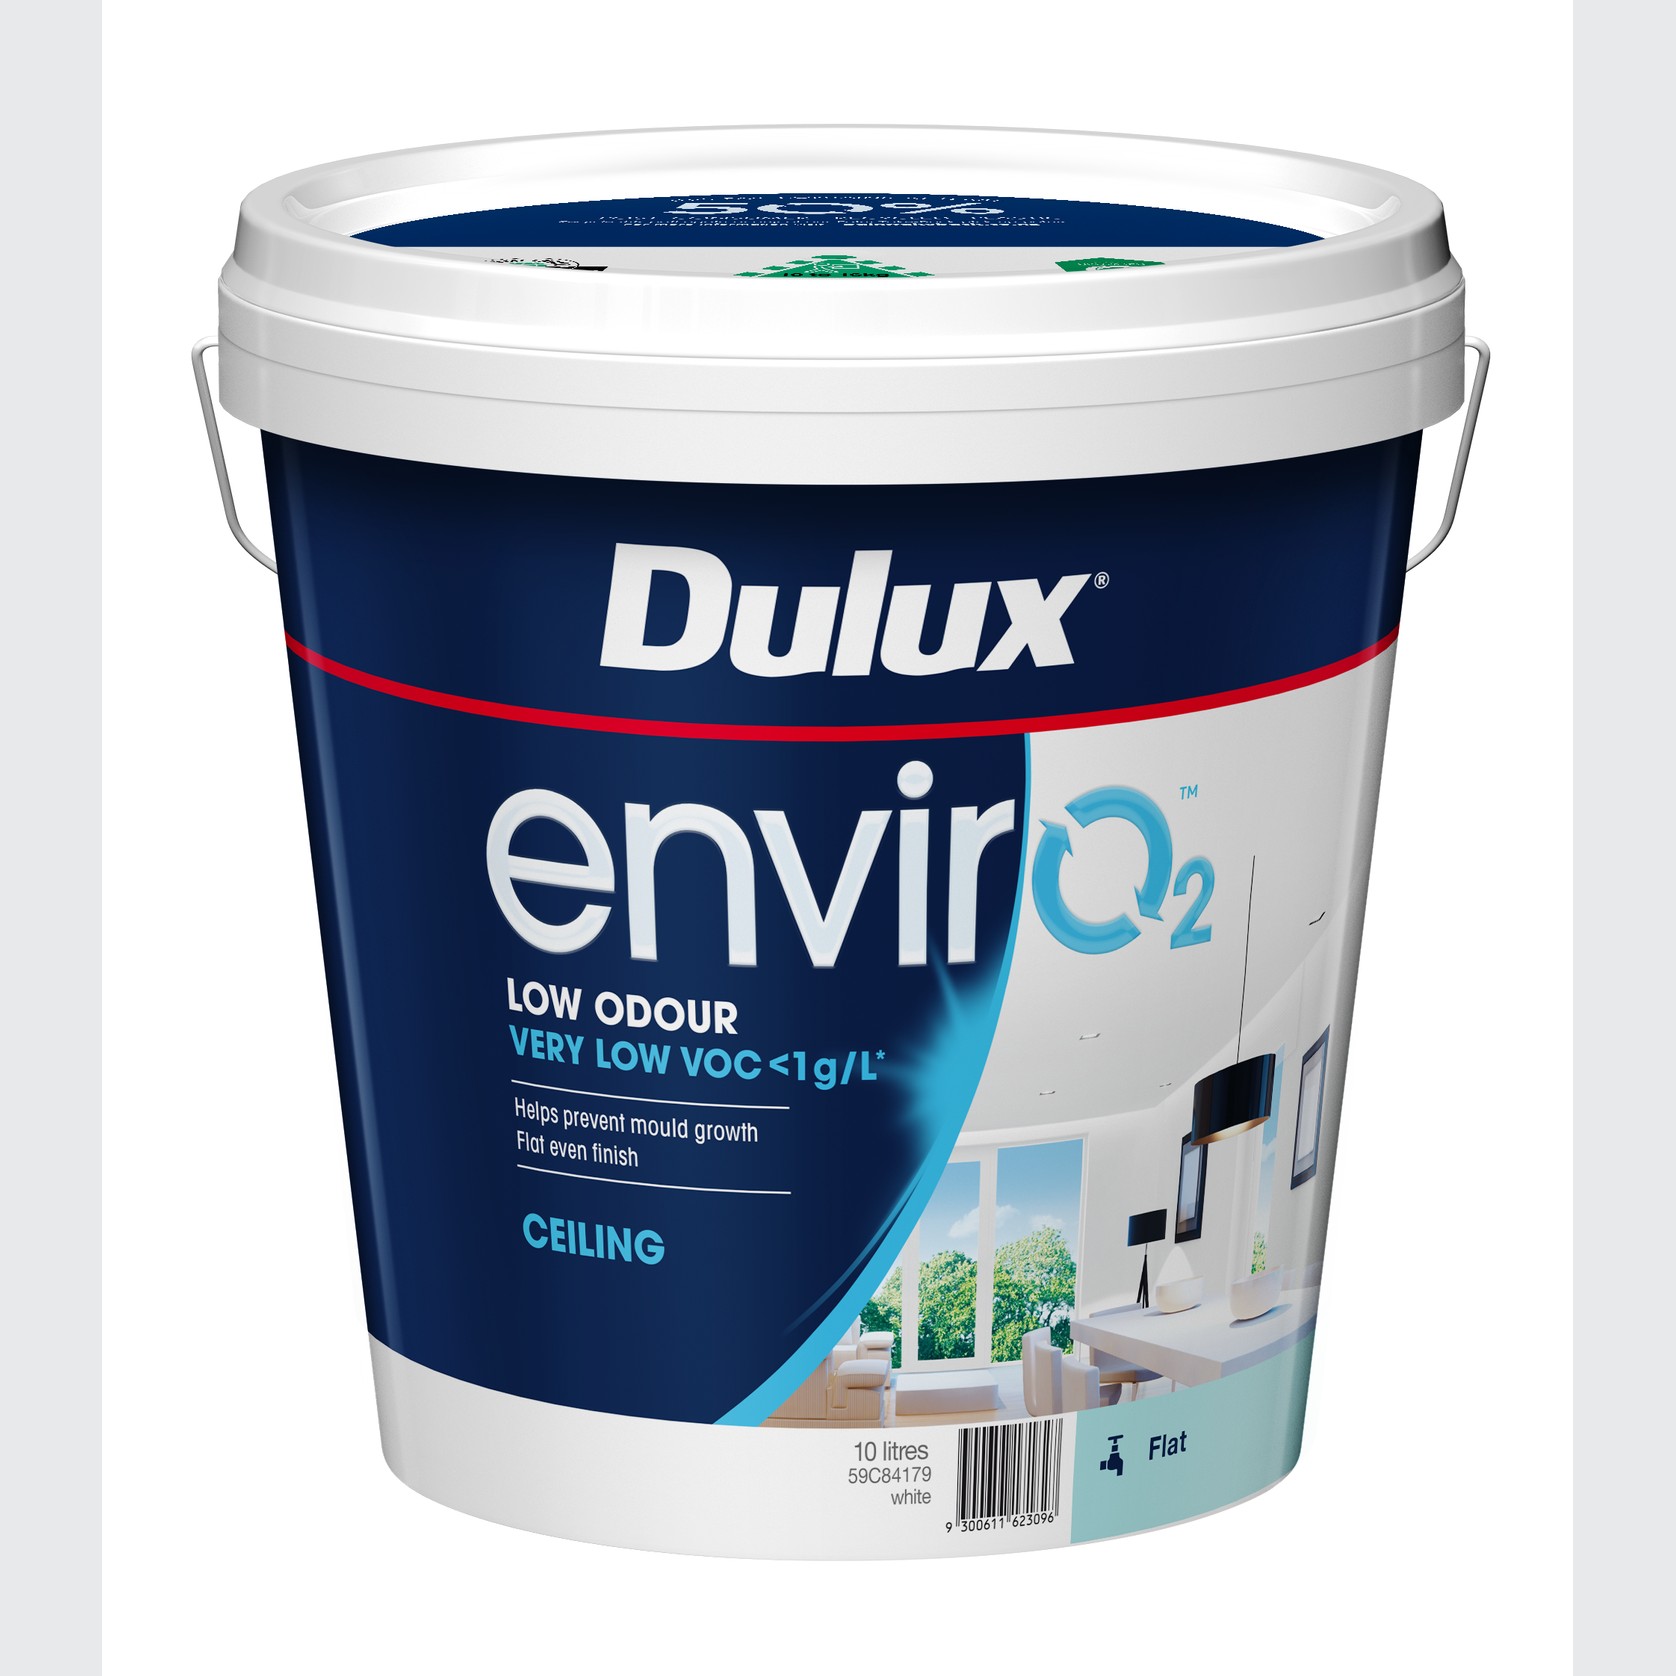 Dulux envirO2 - Ceiling Flat gallery detail image